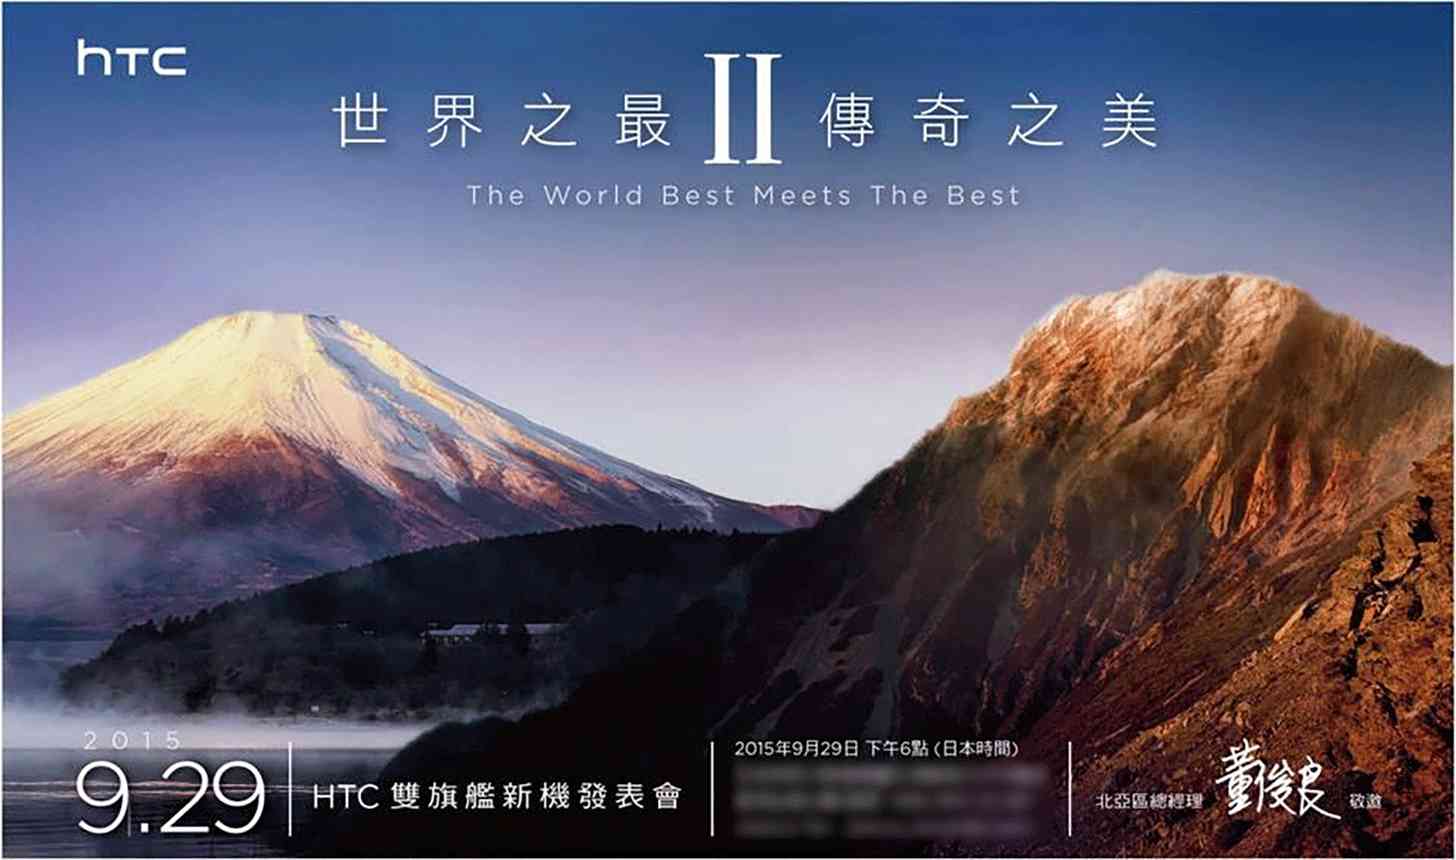 HTC event September 29 invitation